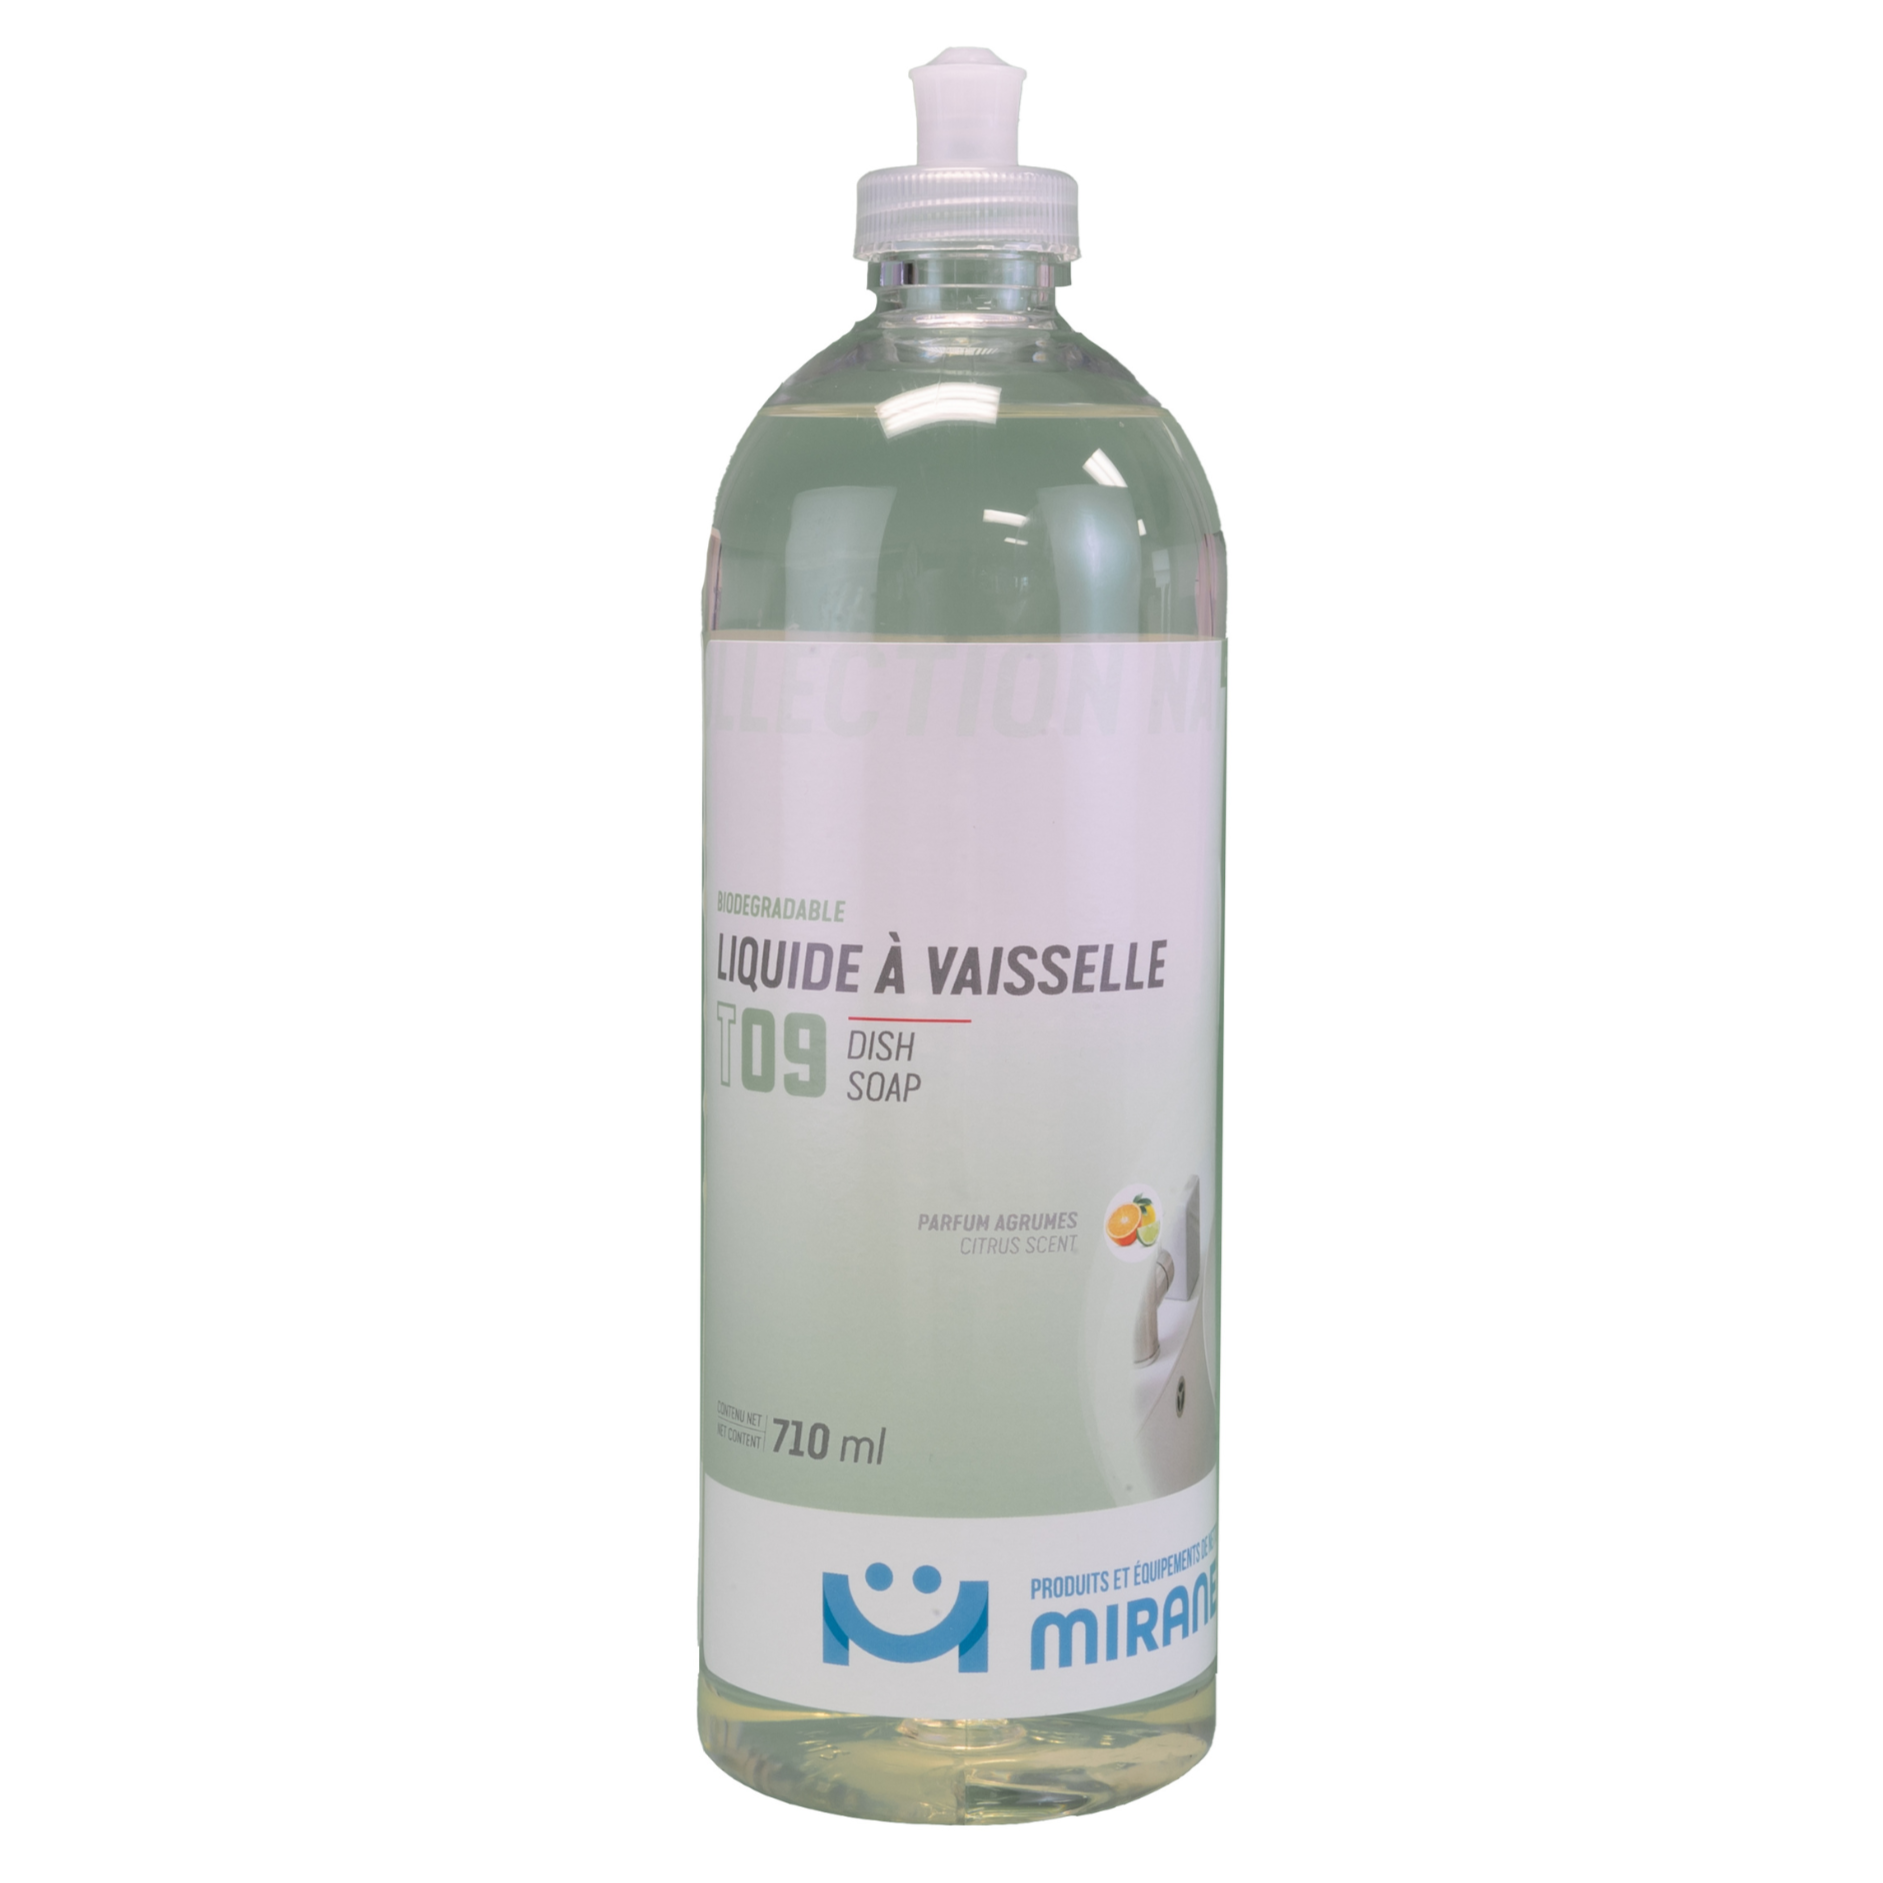 liquide vaisselle parfum agrumes biodégradable 710ml t09 miranet